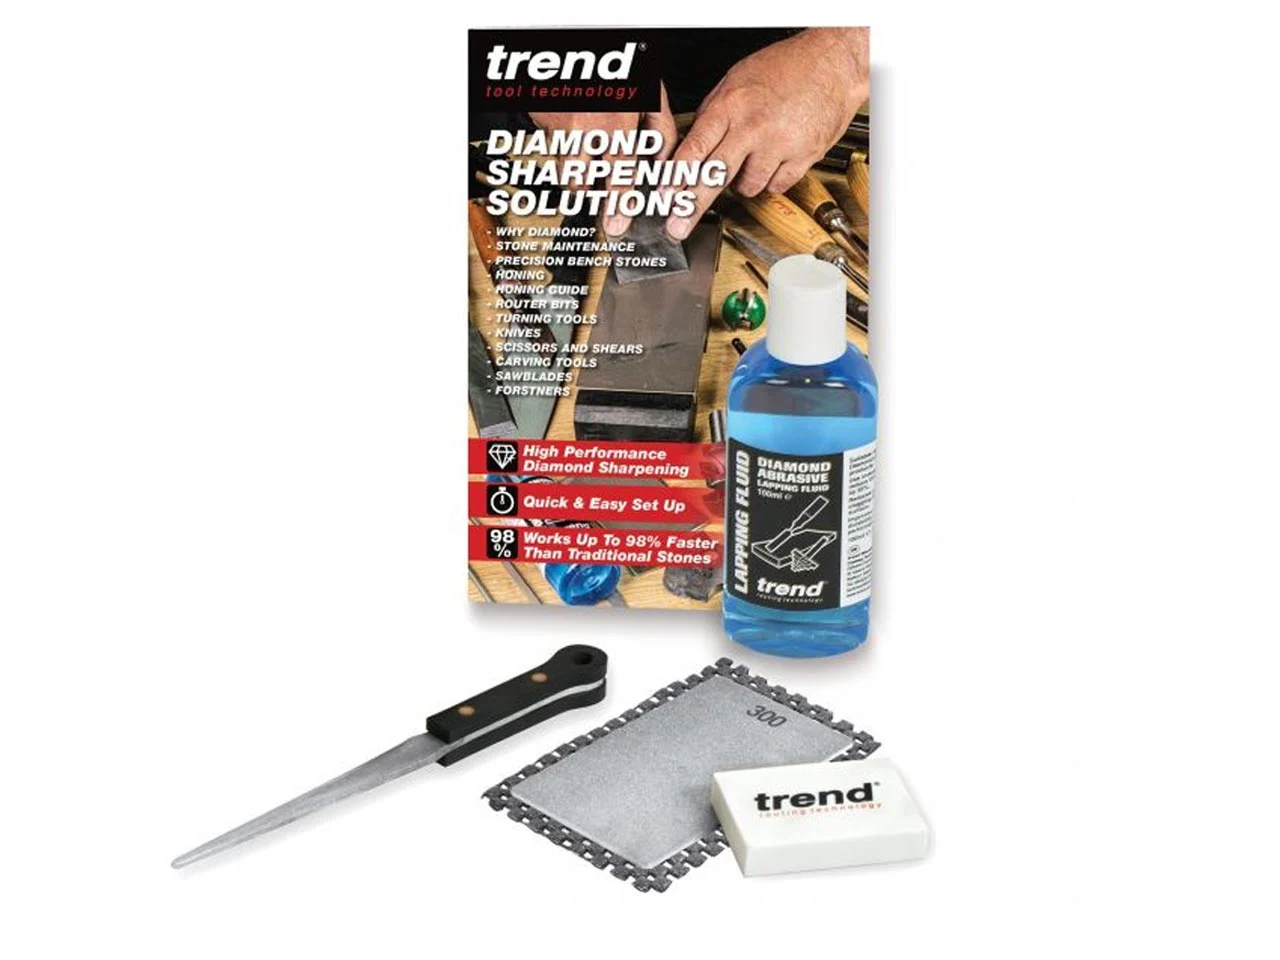 U*DWS/KIT/E - Diamond sharpening kit - Limited Edition Trend Tool Technology